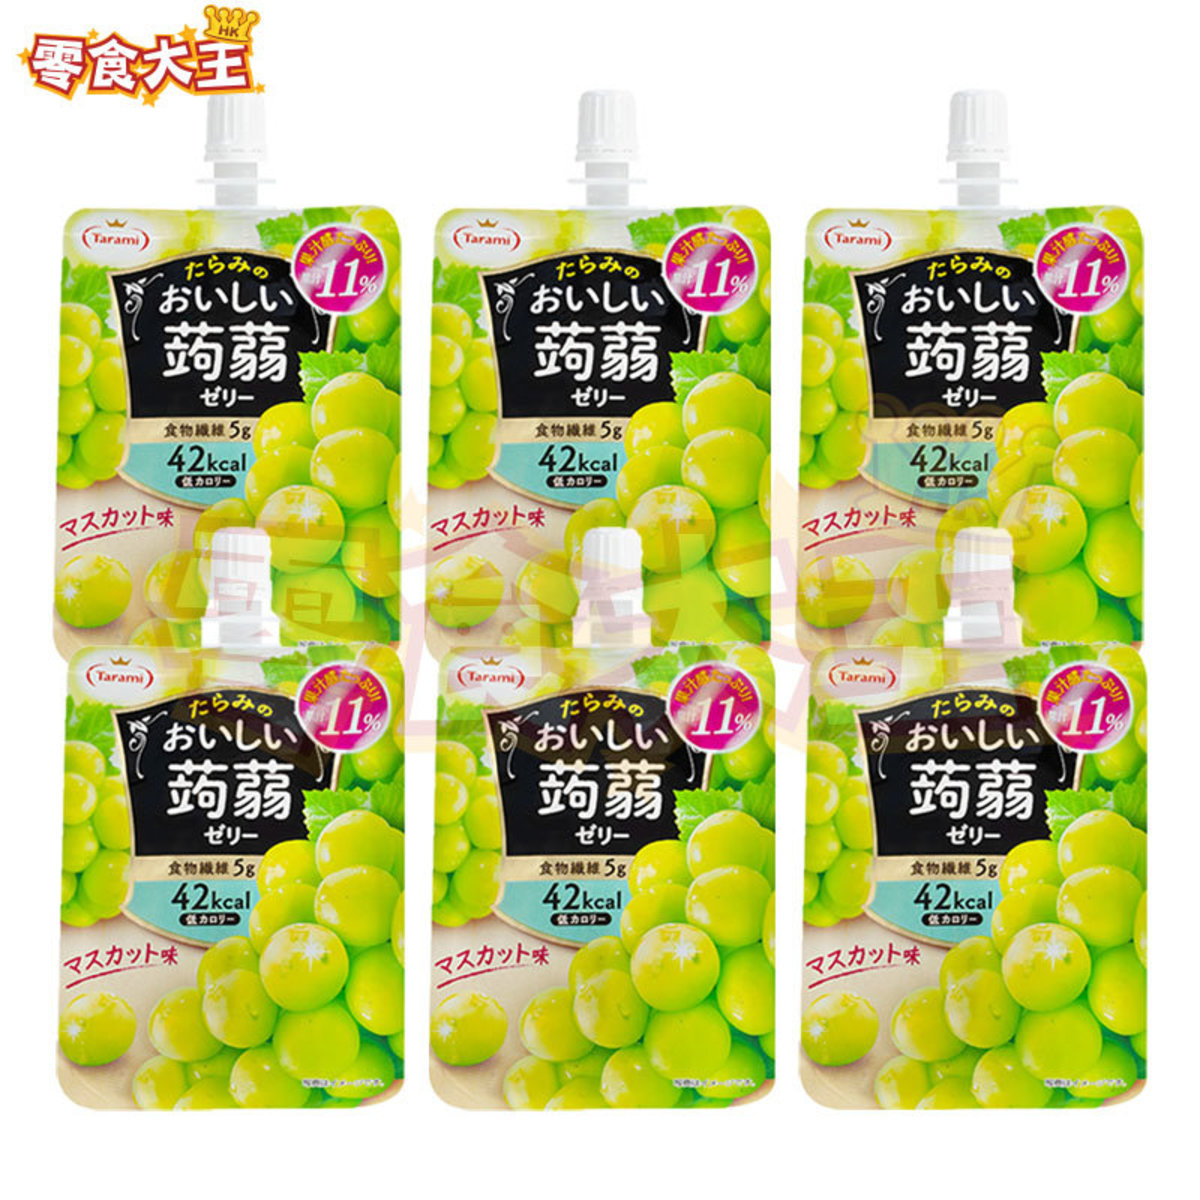 Tarami Low Calorie Konjac Jelly Drink Muscat Flavor 150g X 6 Bags 6 Hktvmall Online Shopping